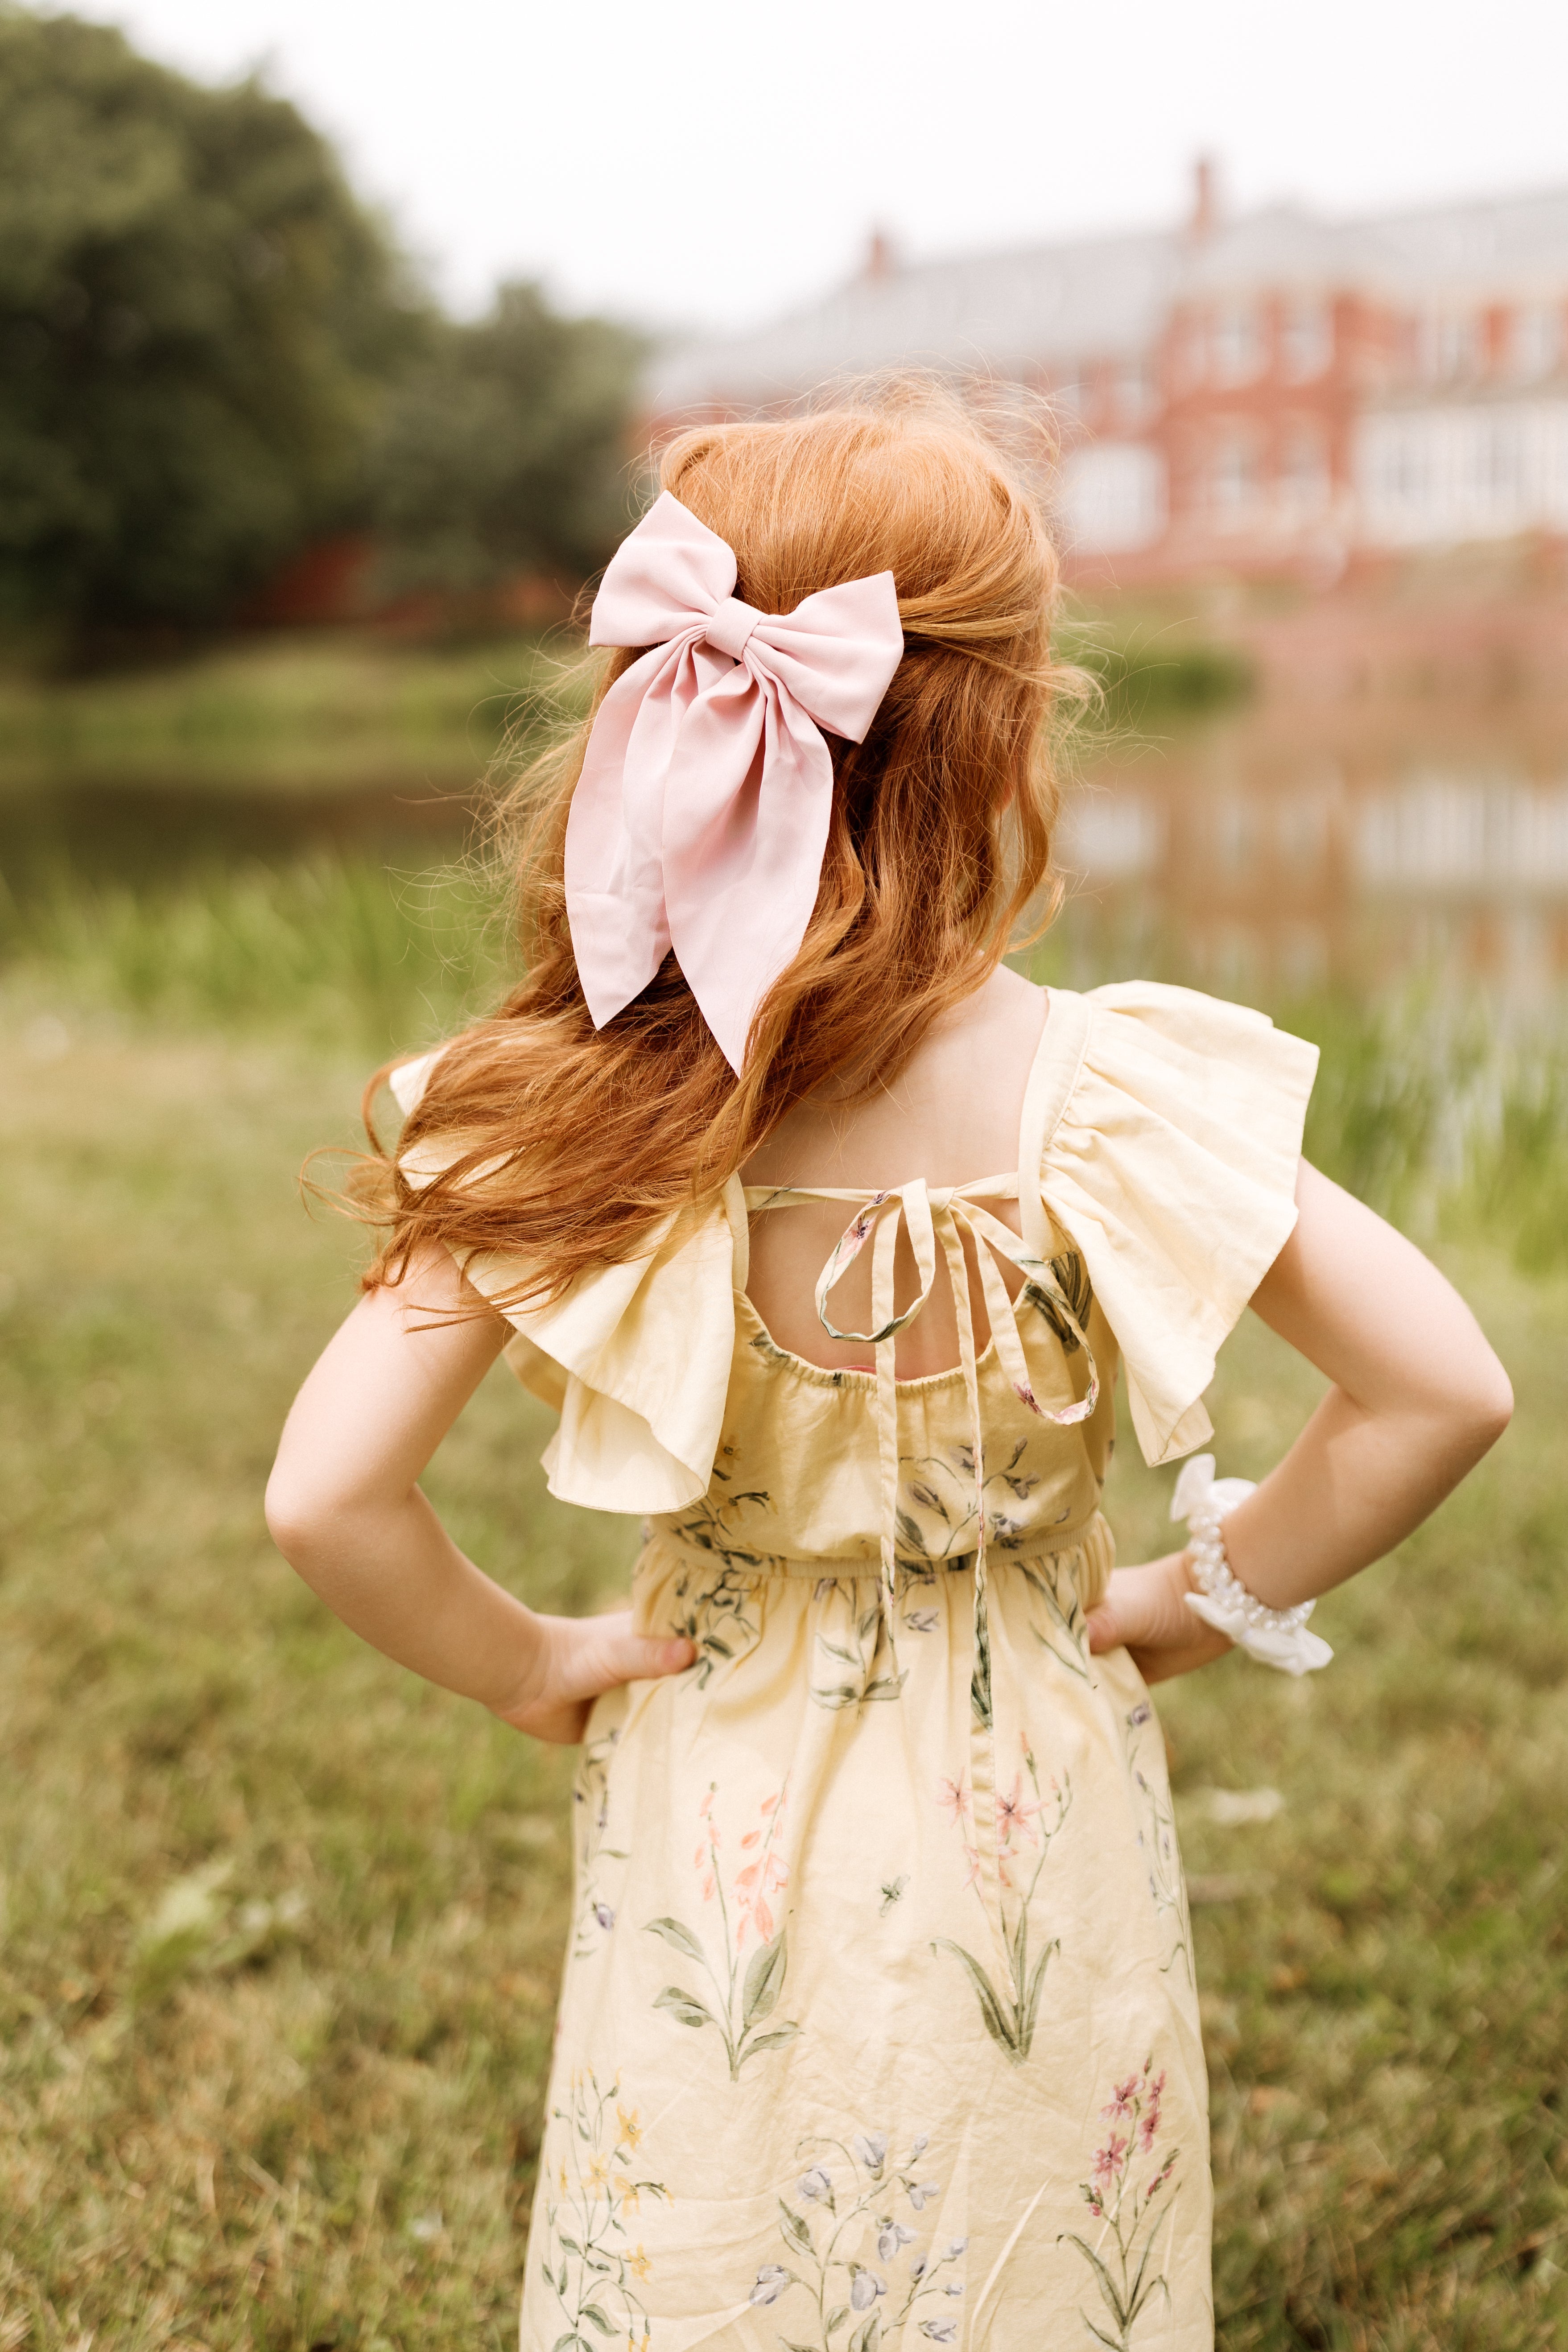 The Elle Girl Dress by Floraison